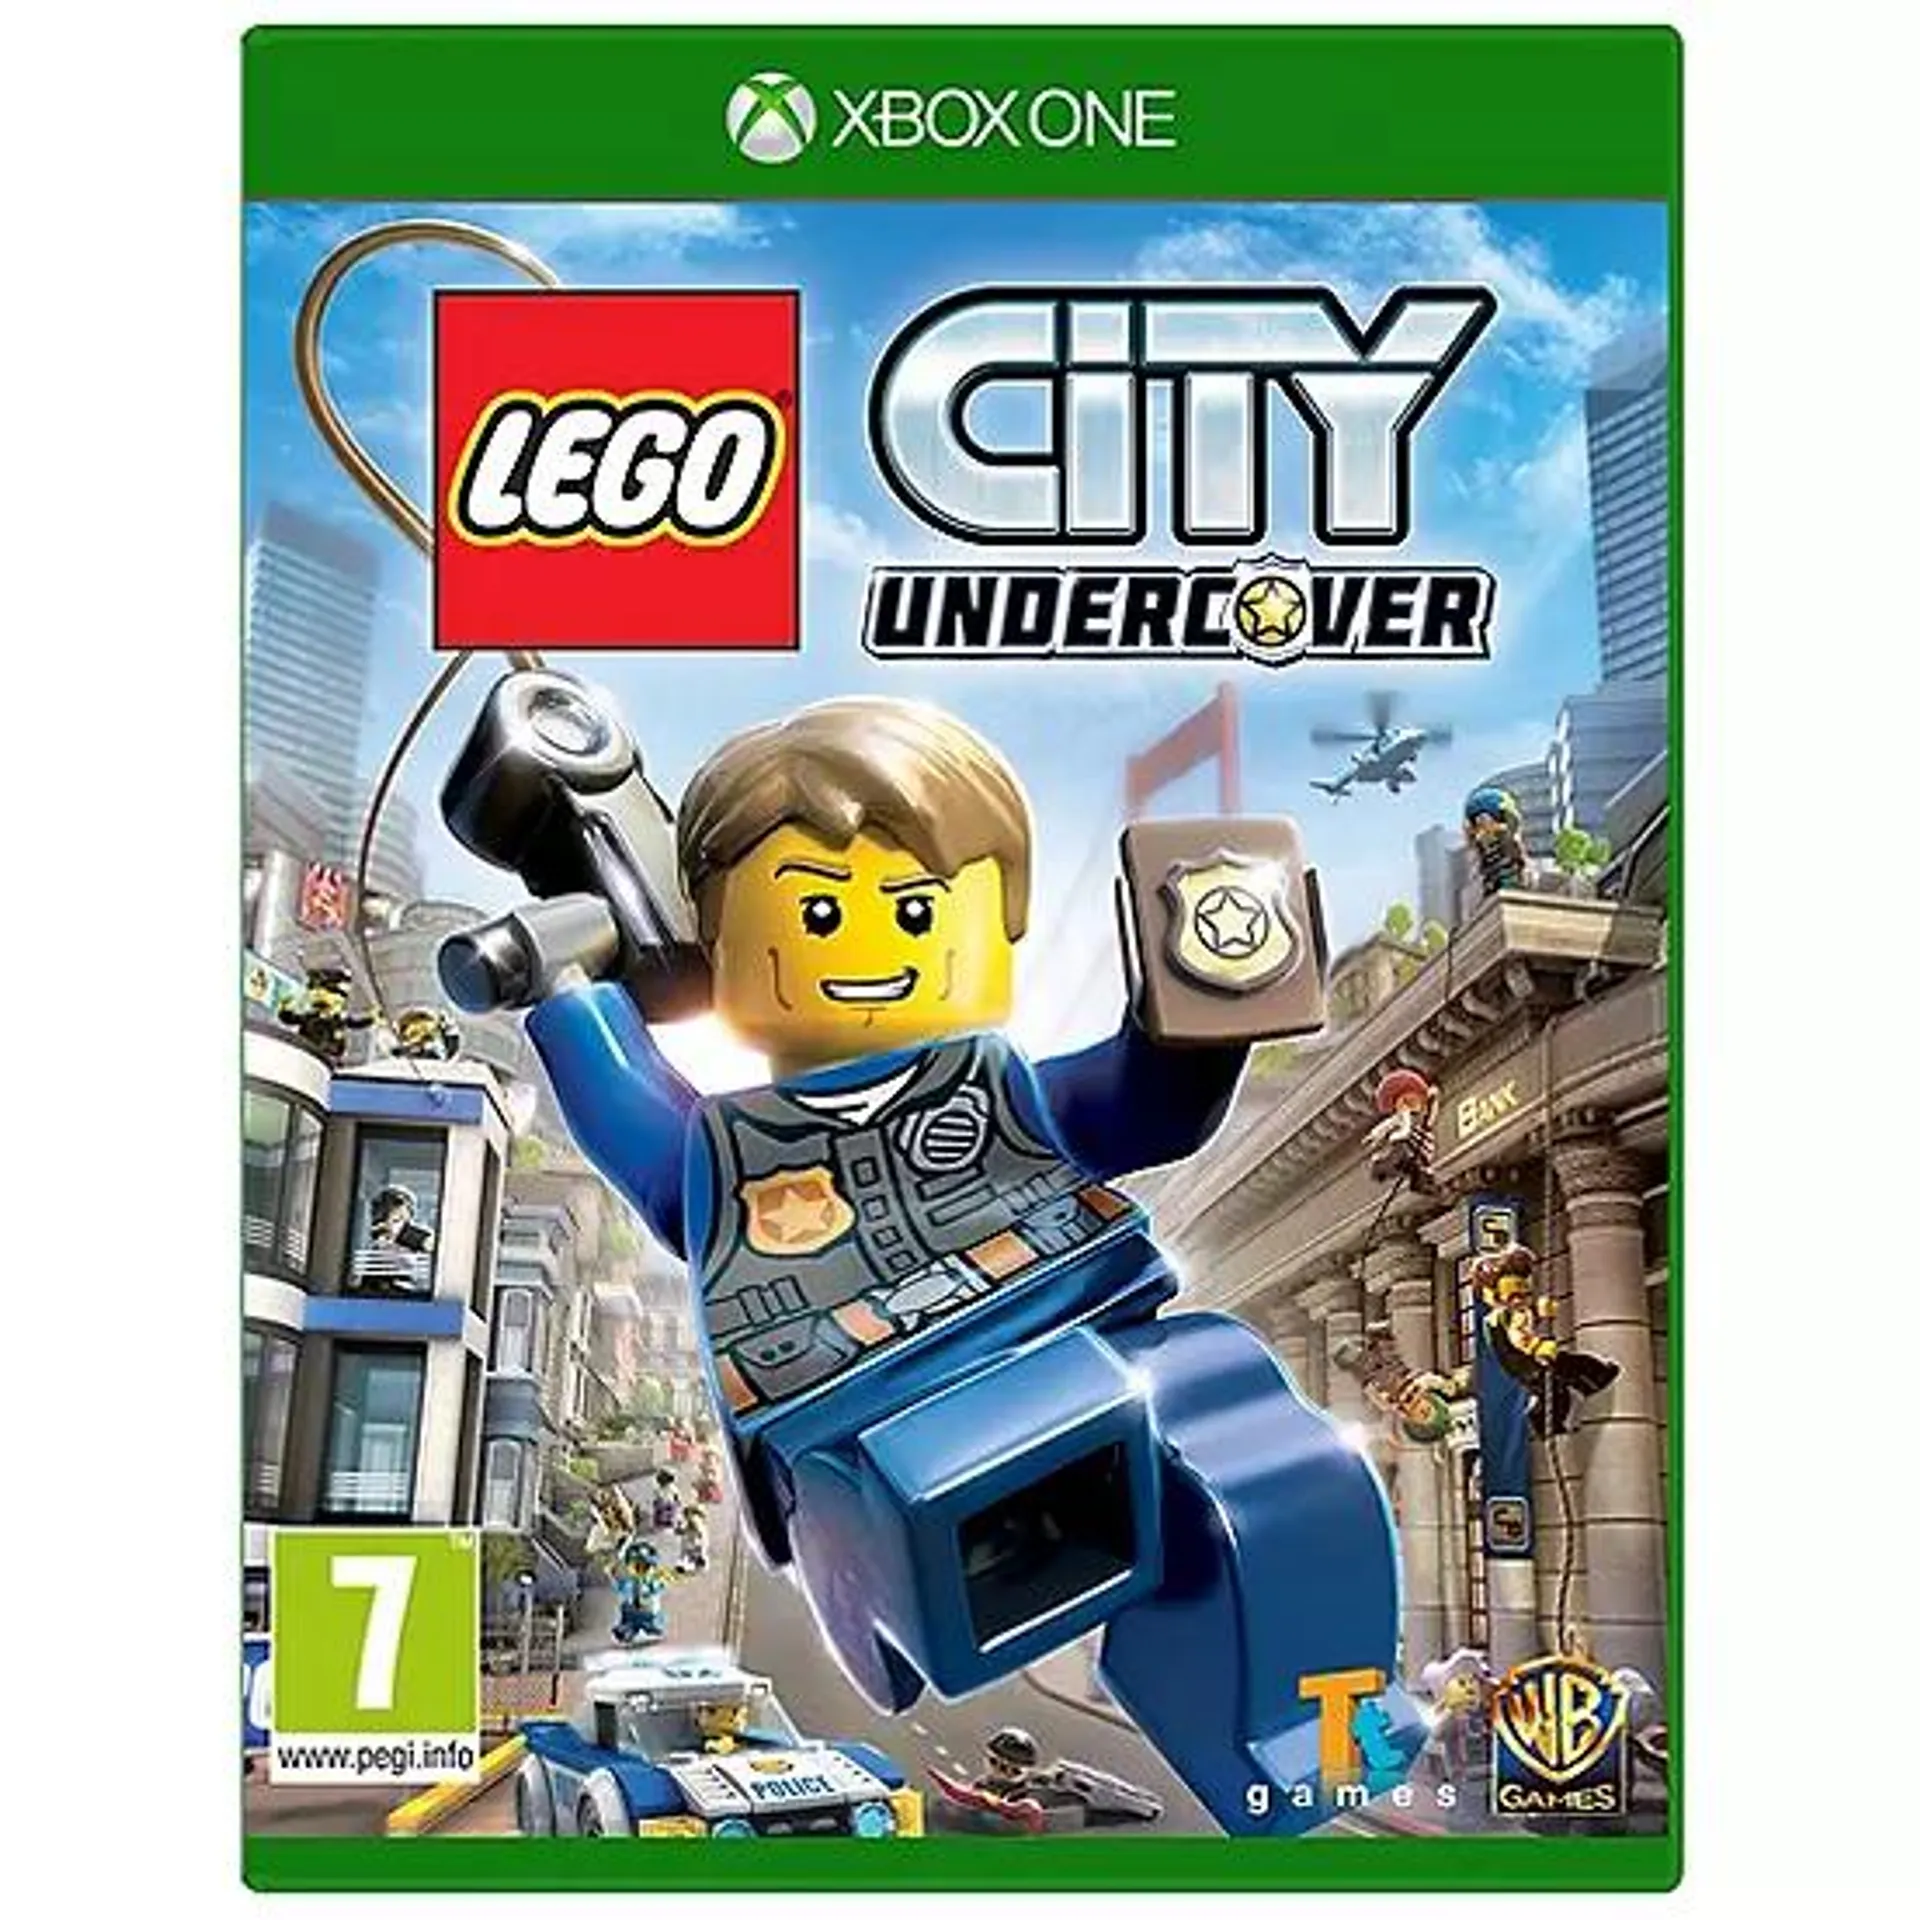 Microsoft Xbox One Lego City Undercover (7+)